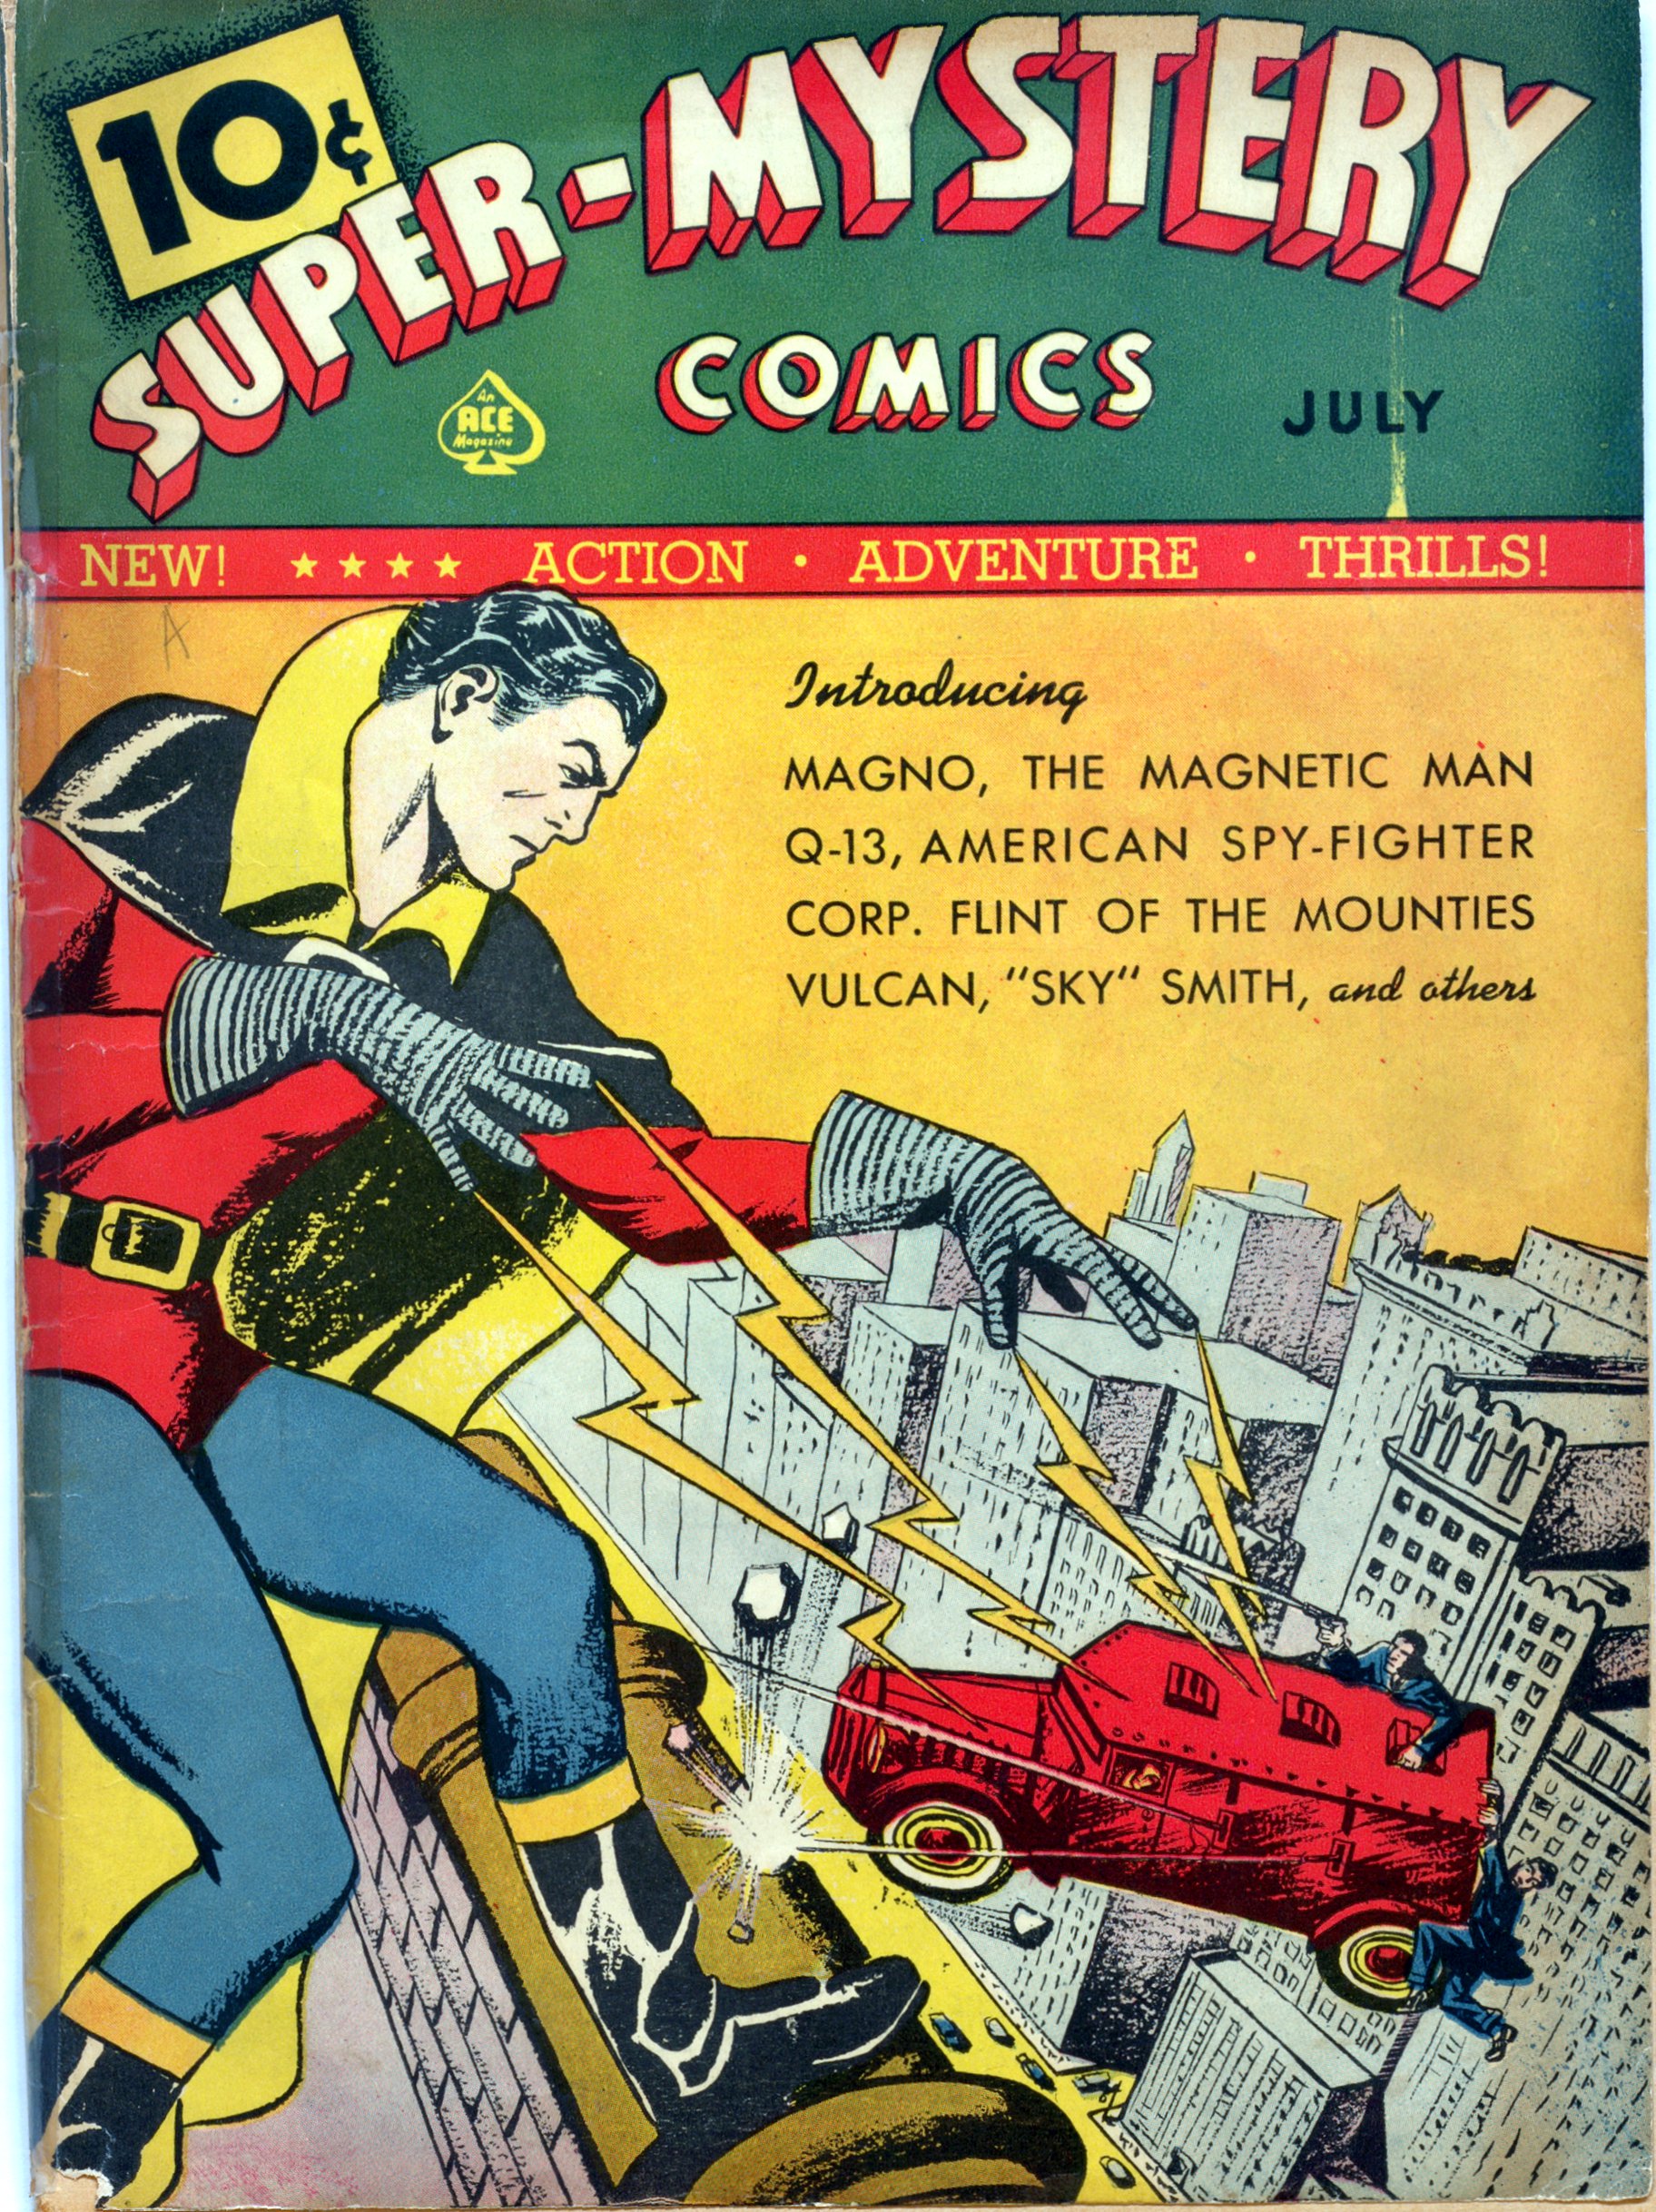 Super-Mystery Comics 001.jpg